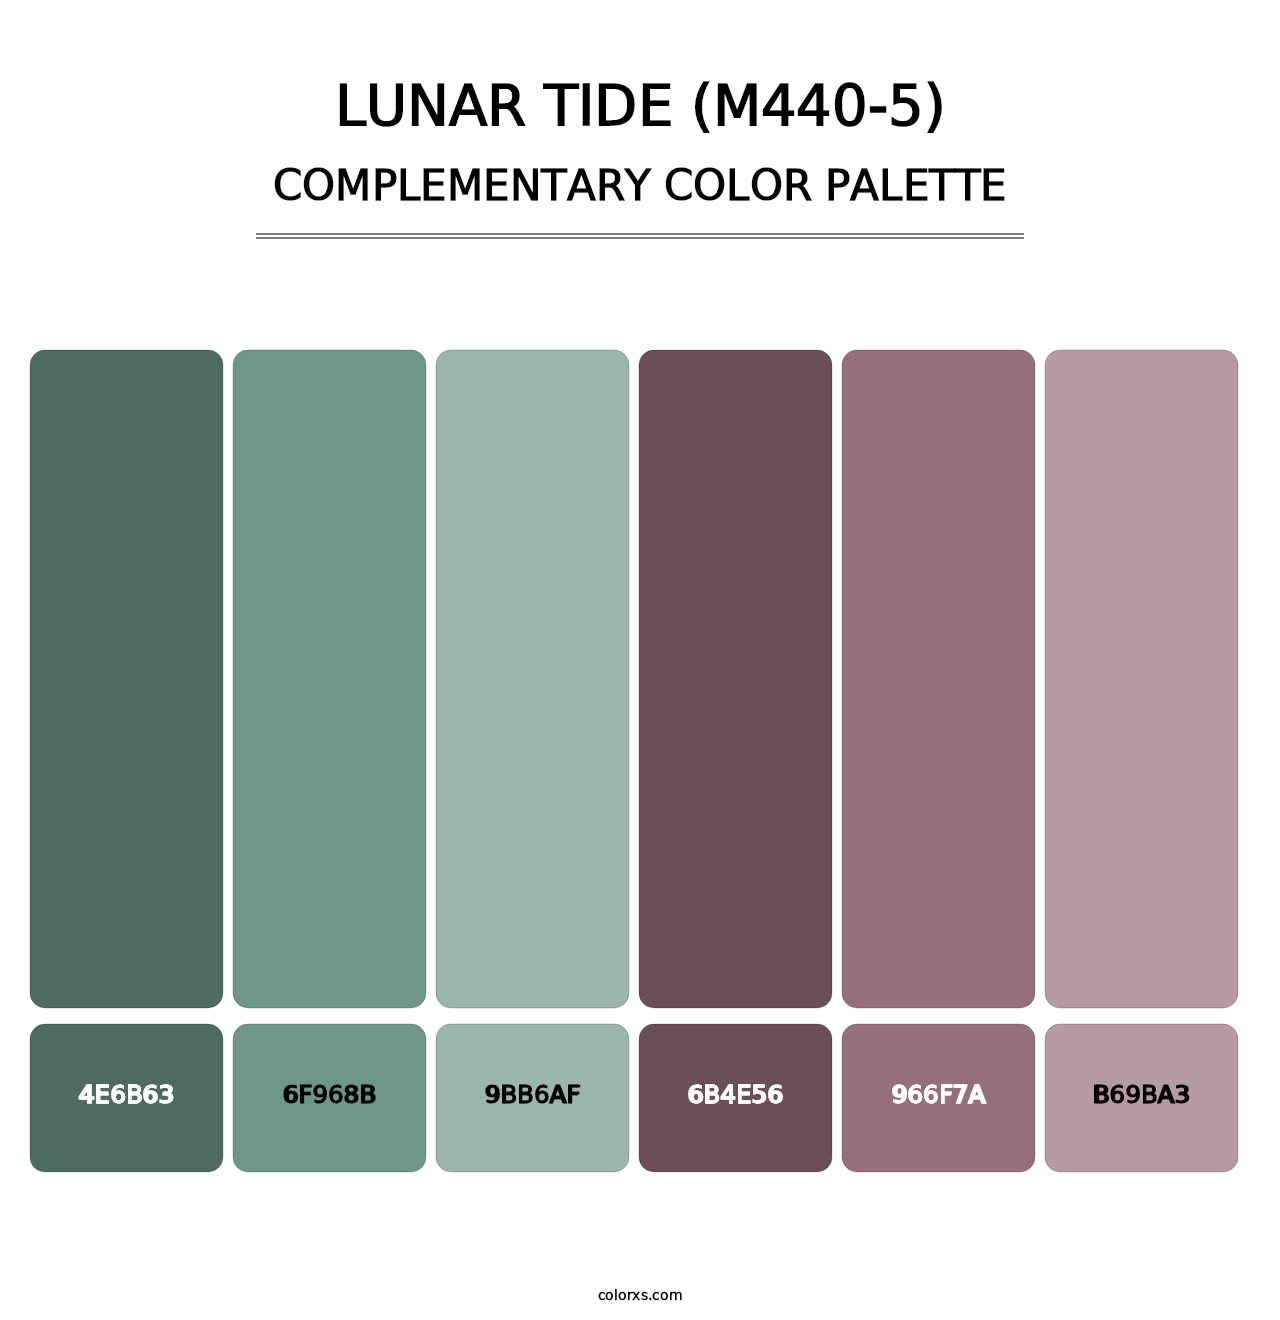 Lunar Tide (M440-5) - Complementary Color Palette